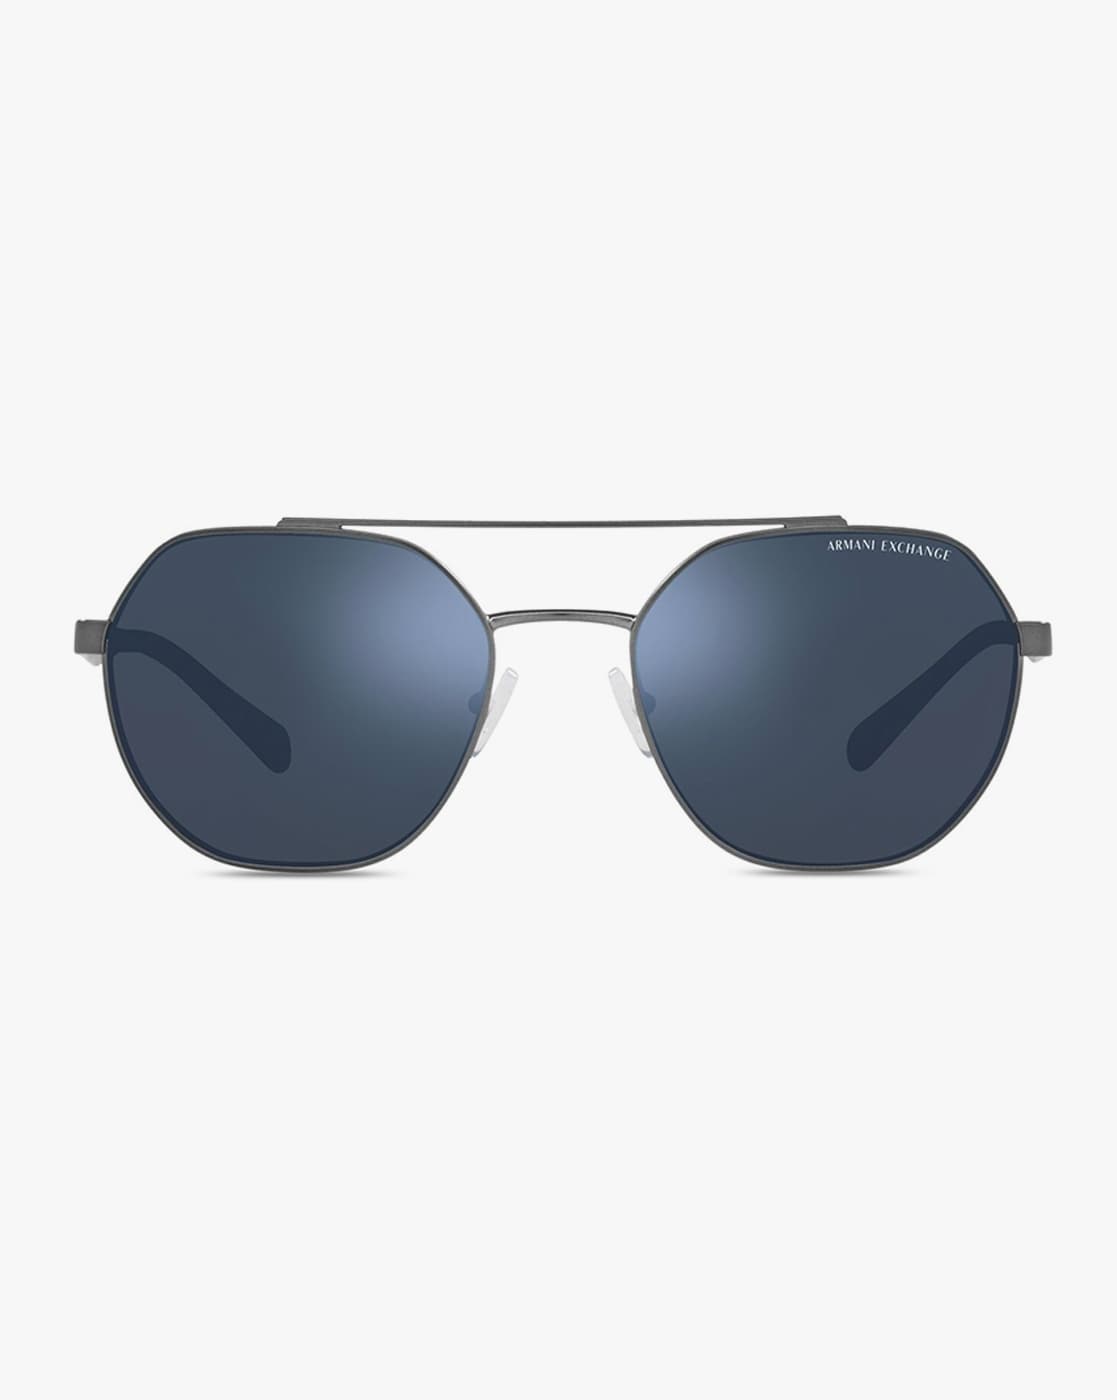 Giorgio Armani AR6125 52 Polar Grey & Matte Gunmetal Polarized Sunglasses |  Sunglass Hut USA